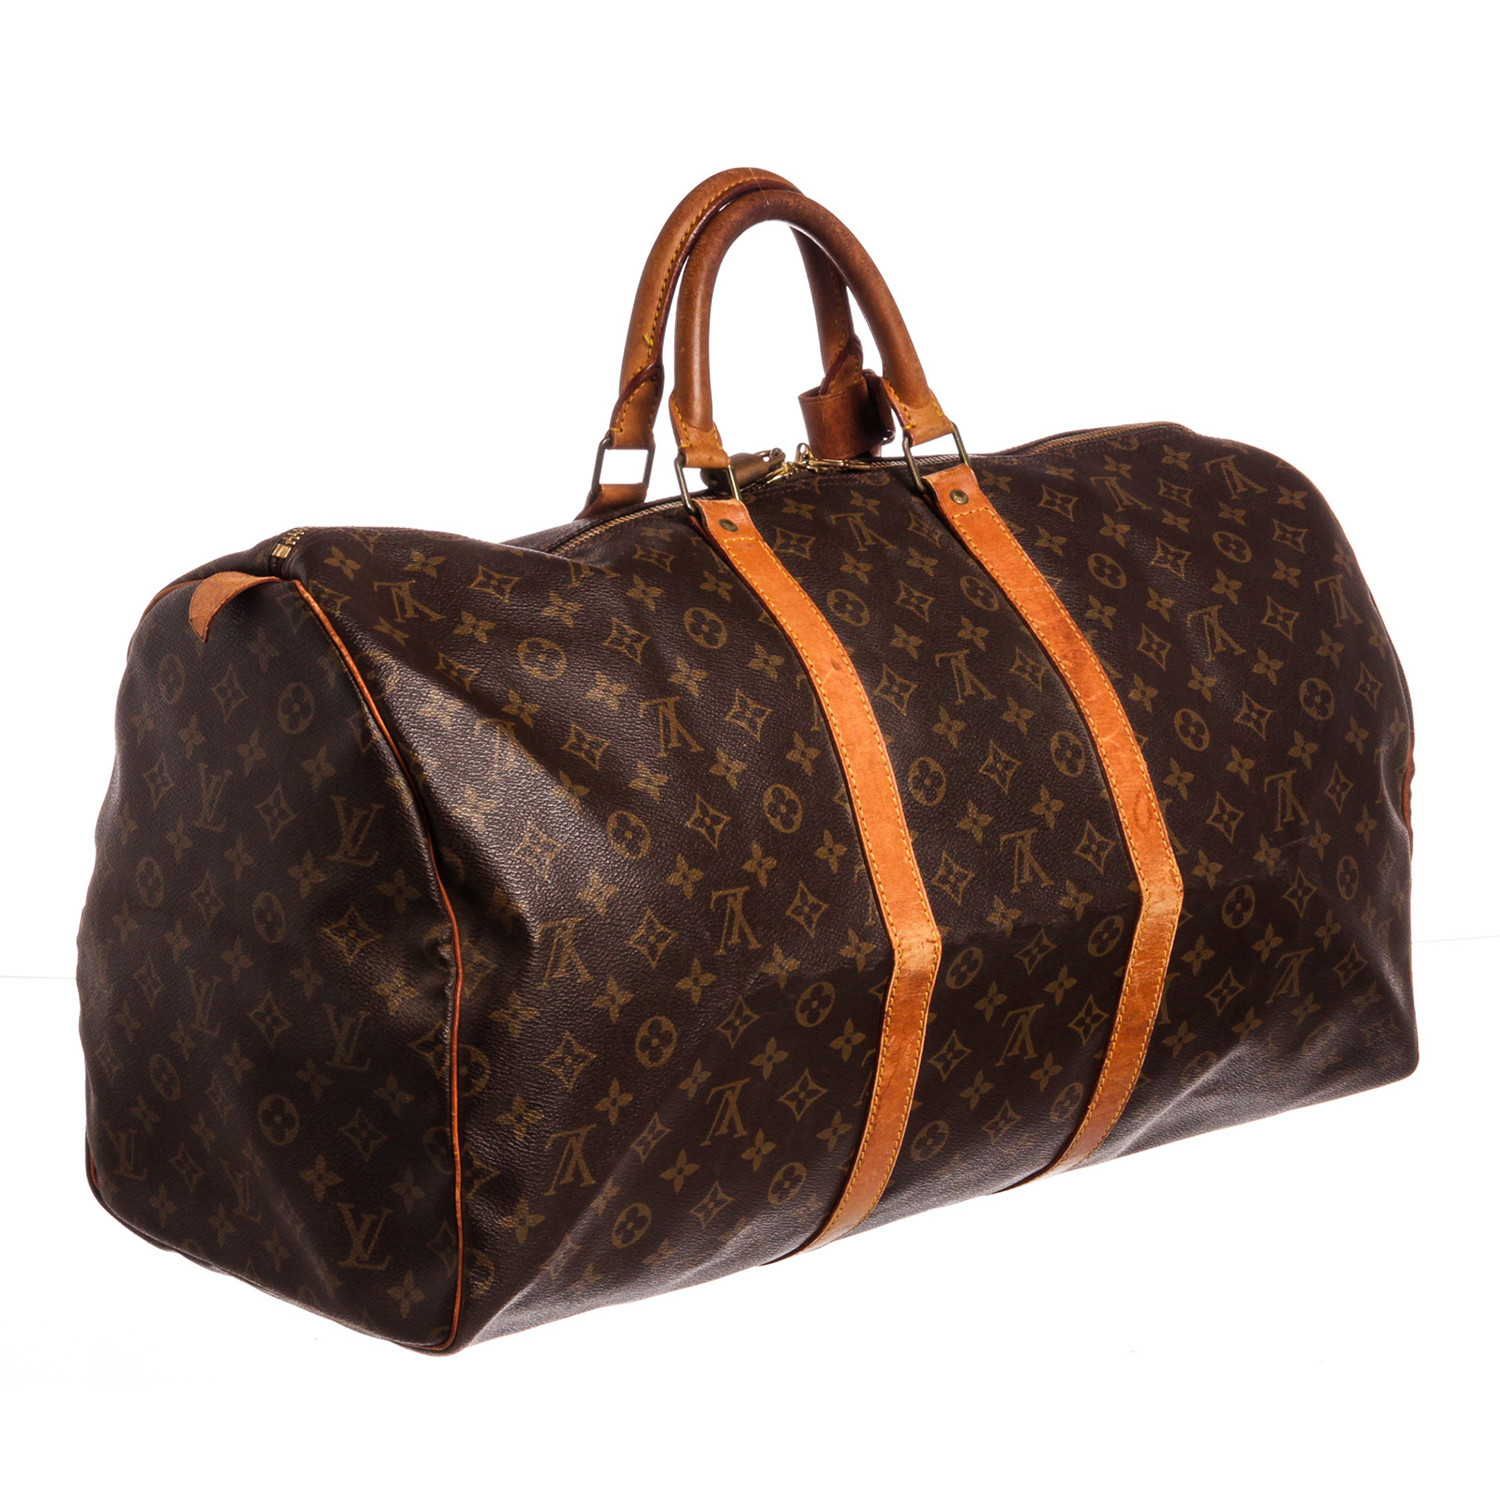 Louis Vuitton, Bags, 2 Louie Vuitton Duffle Bags For Sale